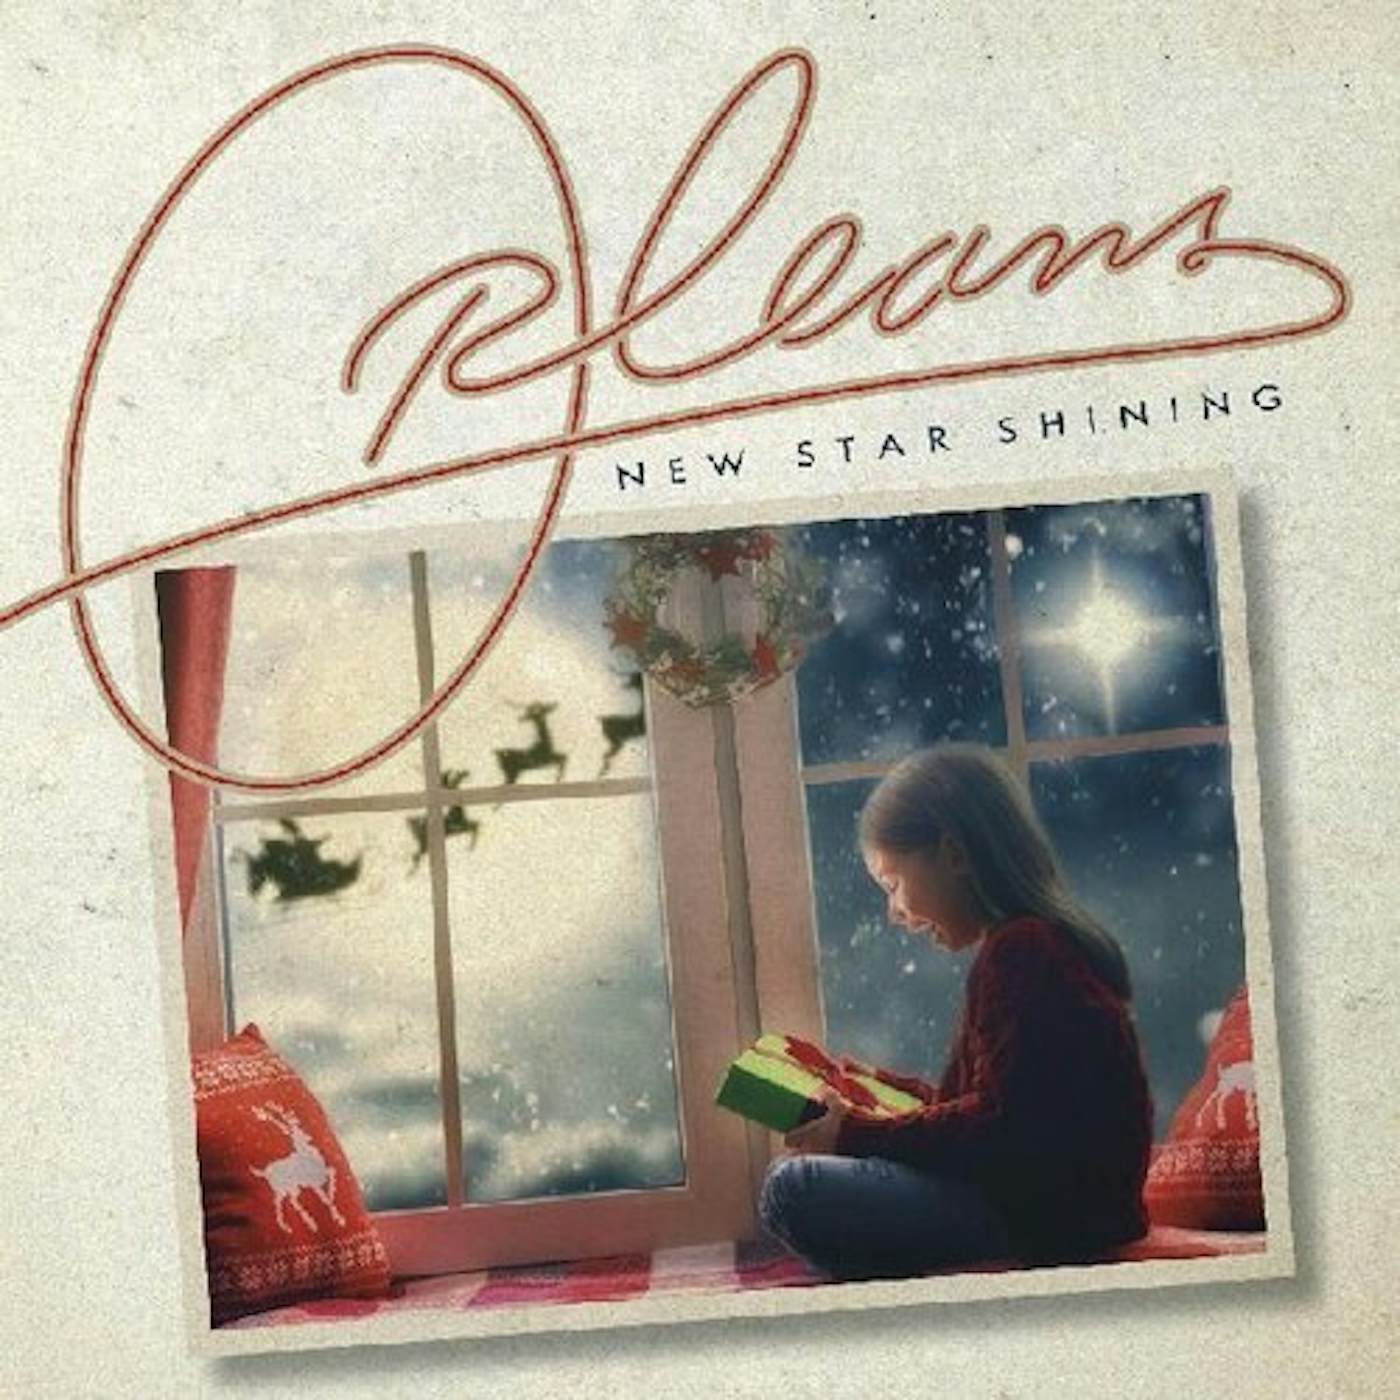 Orleans NEW STAR SHINING CD